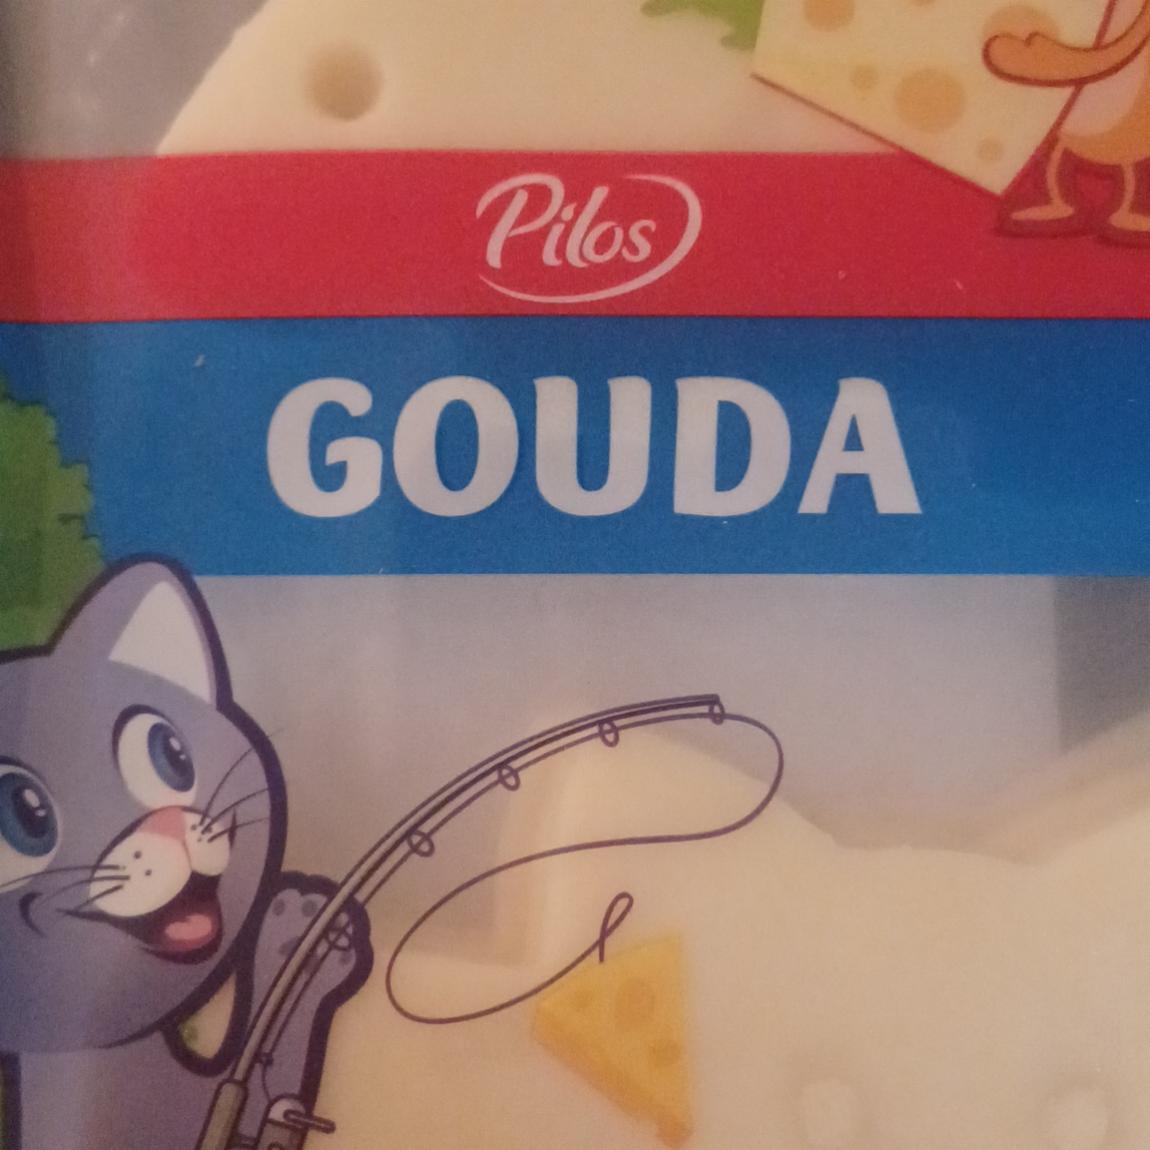 Fotografie - Gouda cheese slices Pilos